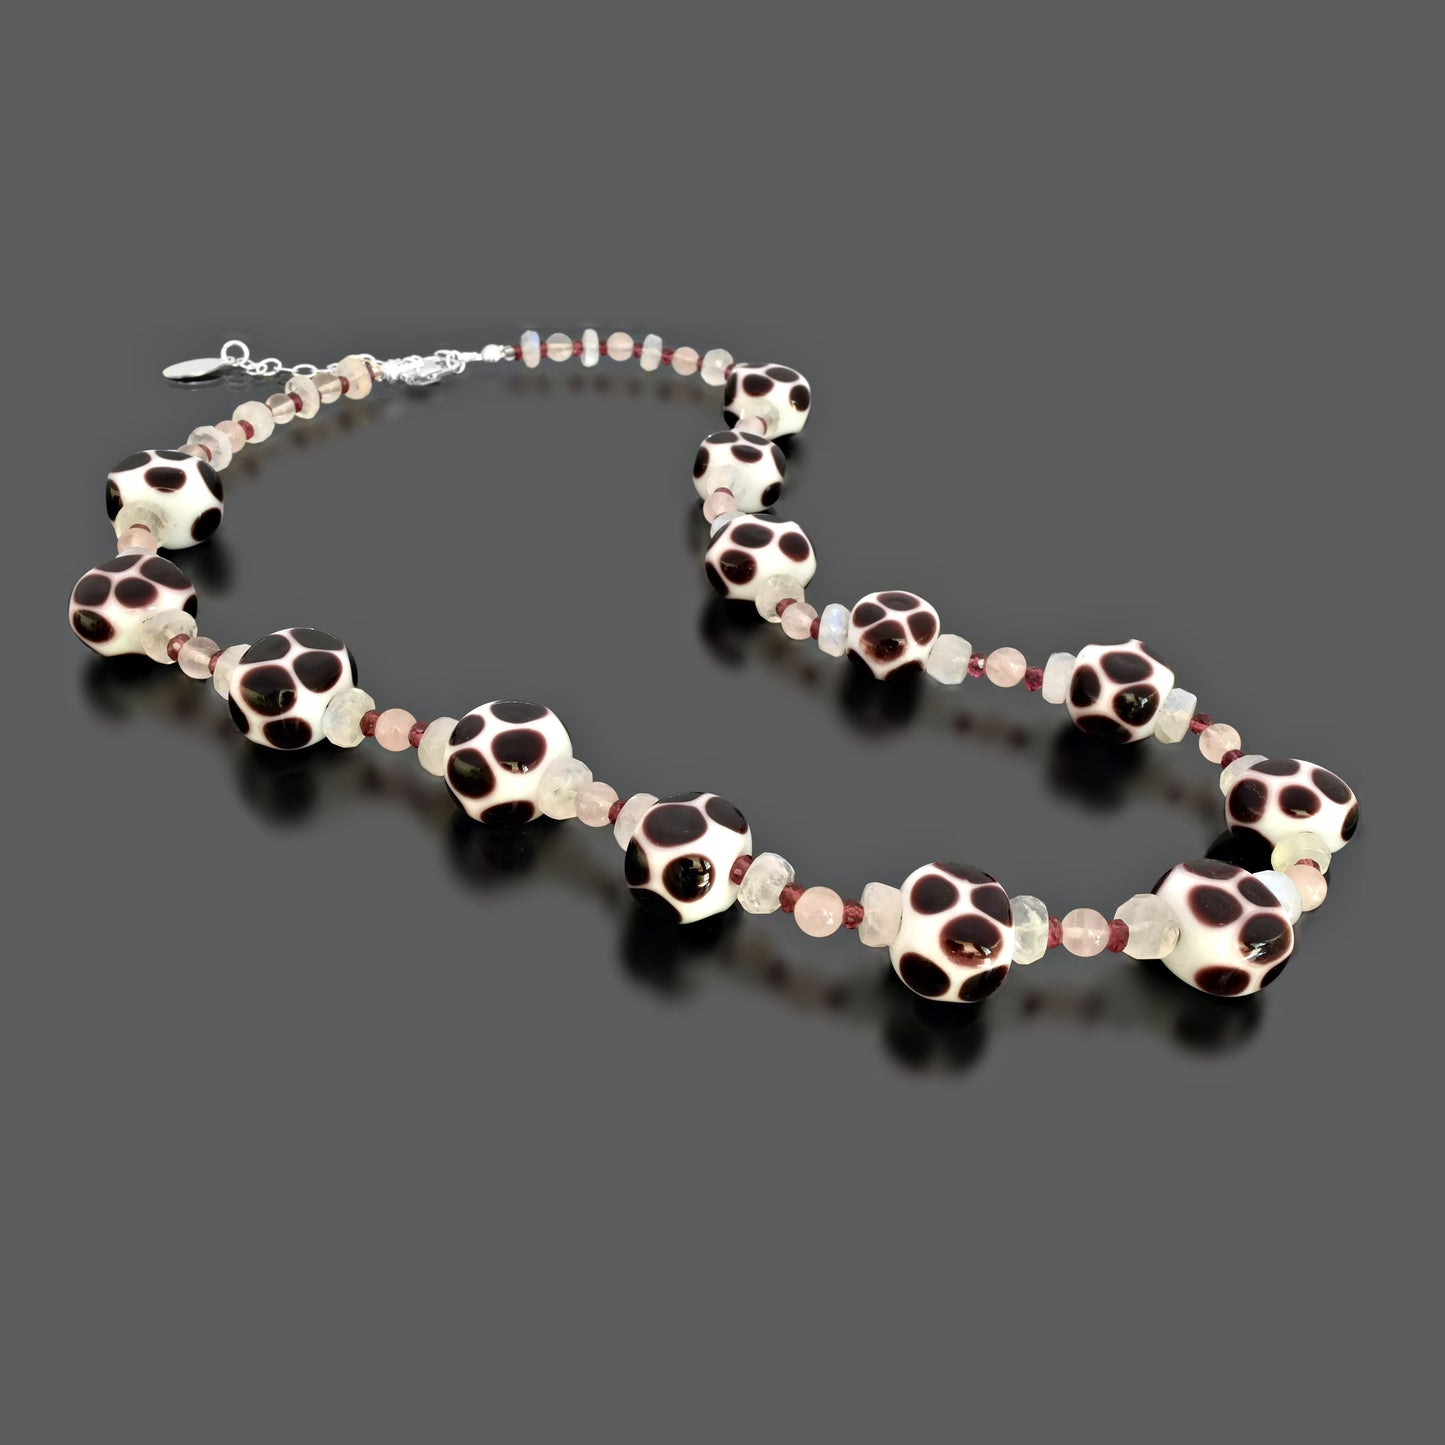 Leopard Dot Murano Glass Necklace with Rose Quartz, Moonstone & Garnet Sterling Silver 